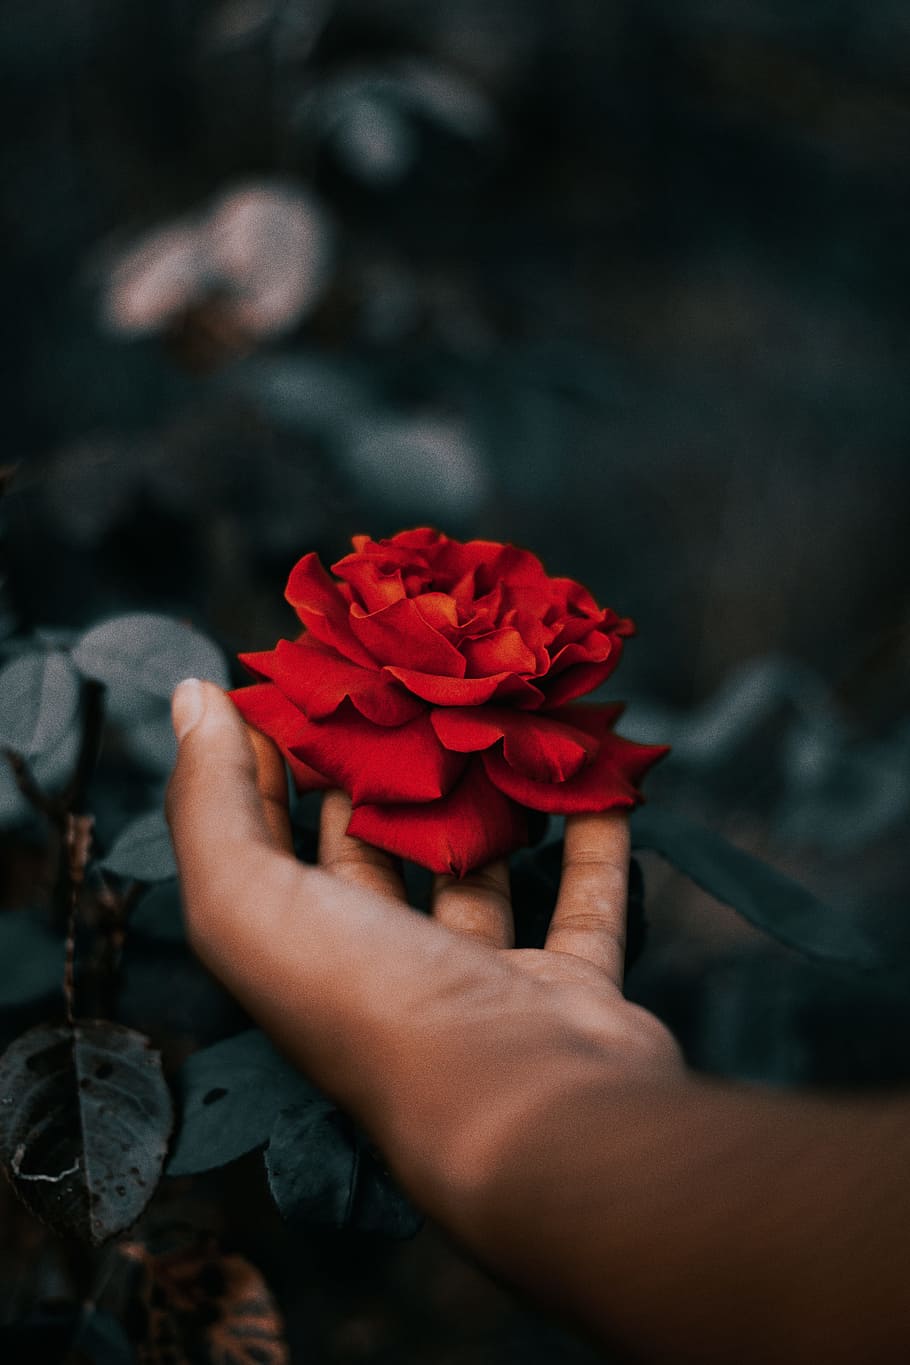 person holding red Rosa rose, hand, closeup, petal, flower, dark